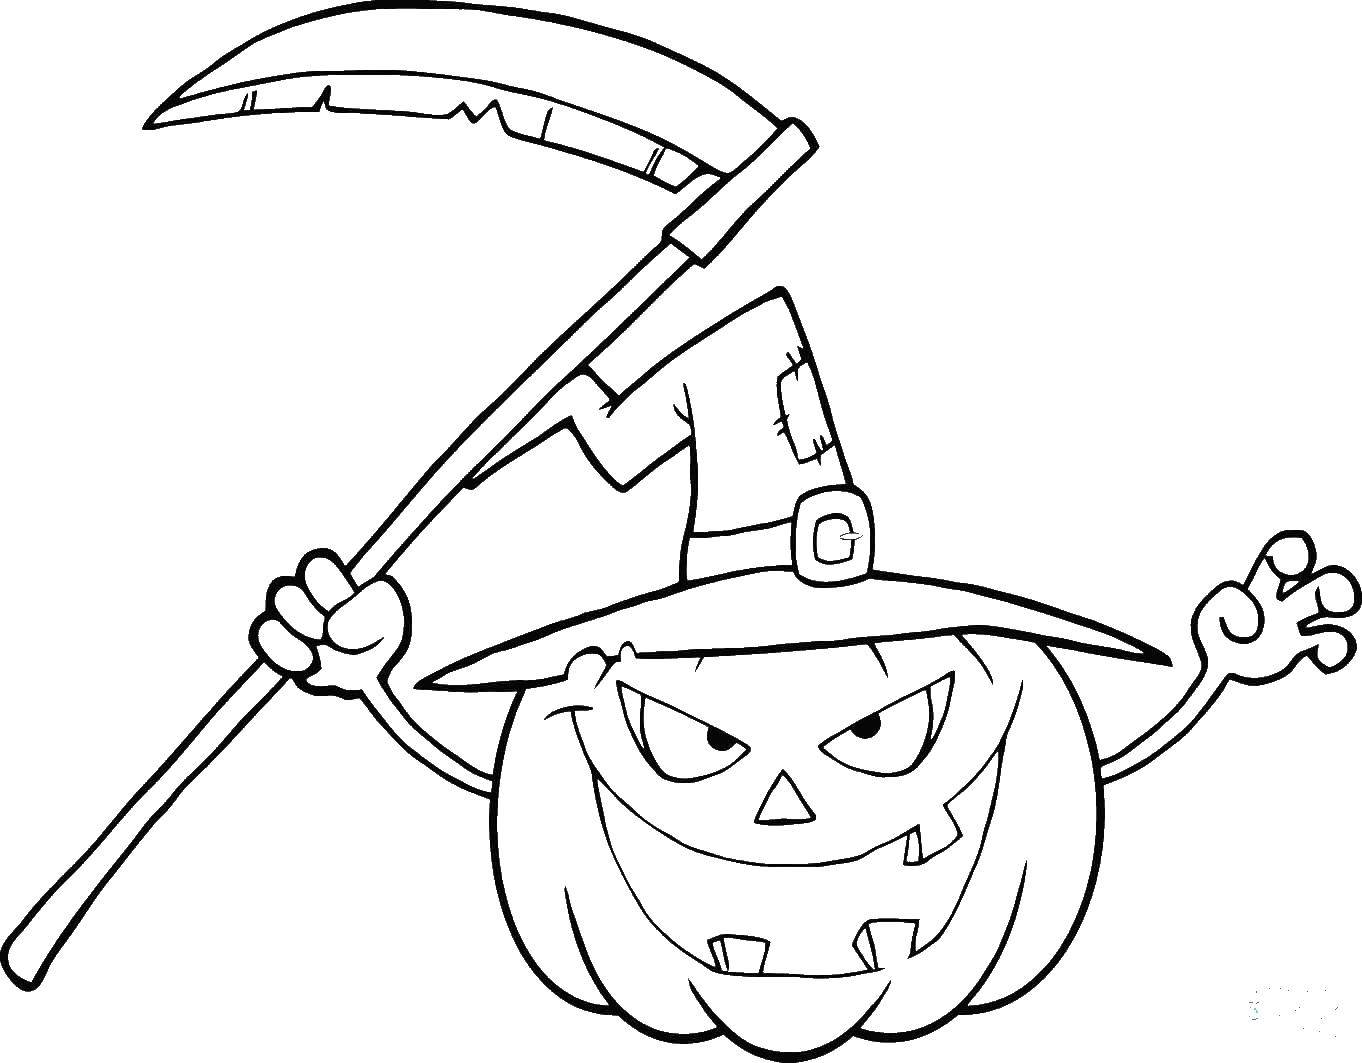 Coloring Evil pumpkin with a scythe. Category Halloween. Tags:  Halloween, pumpkin.